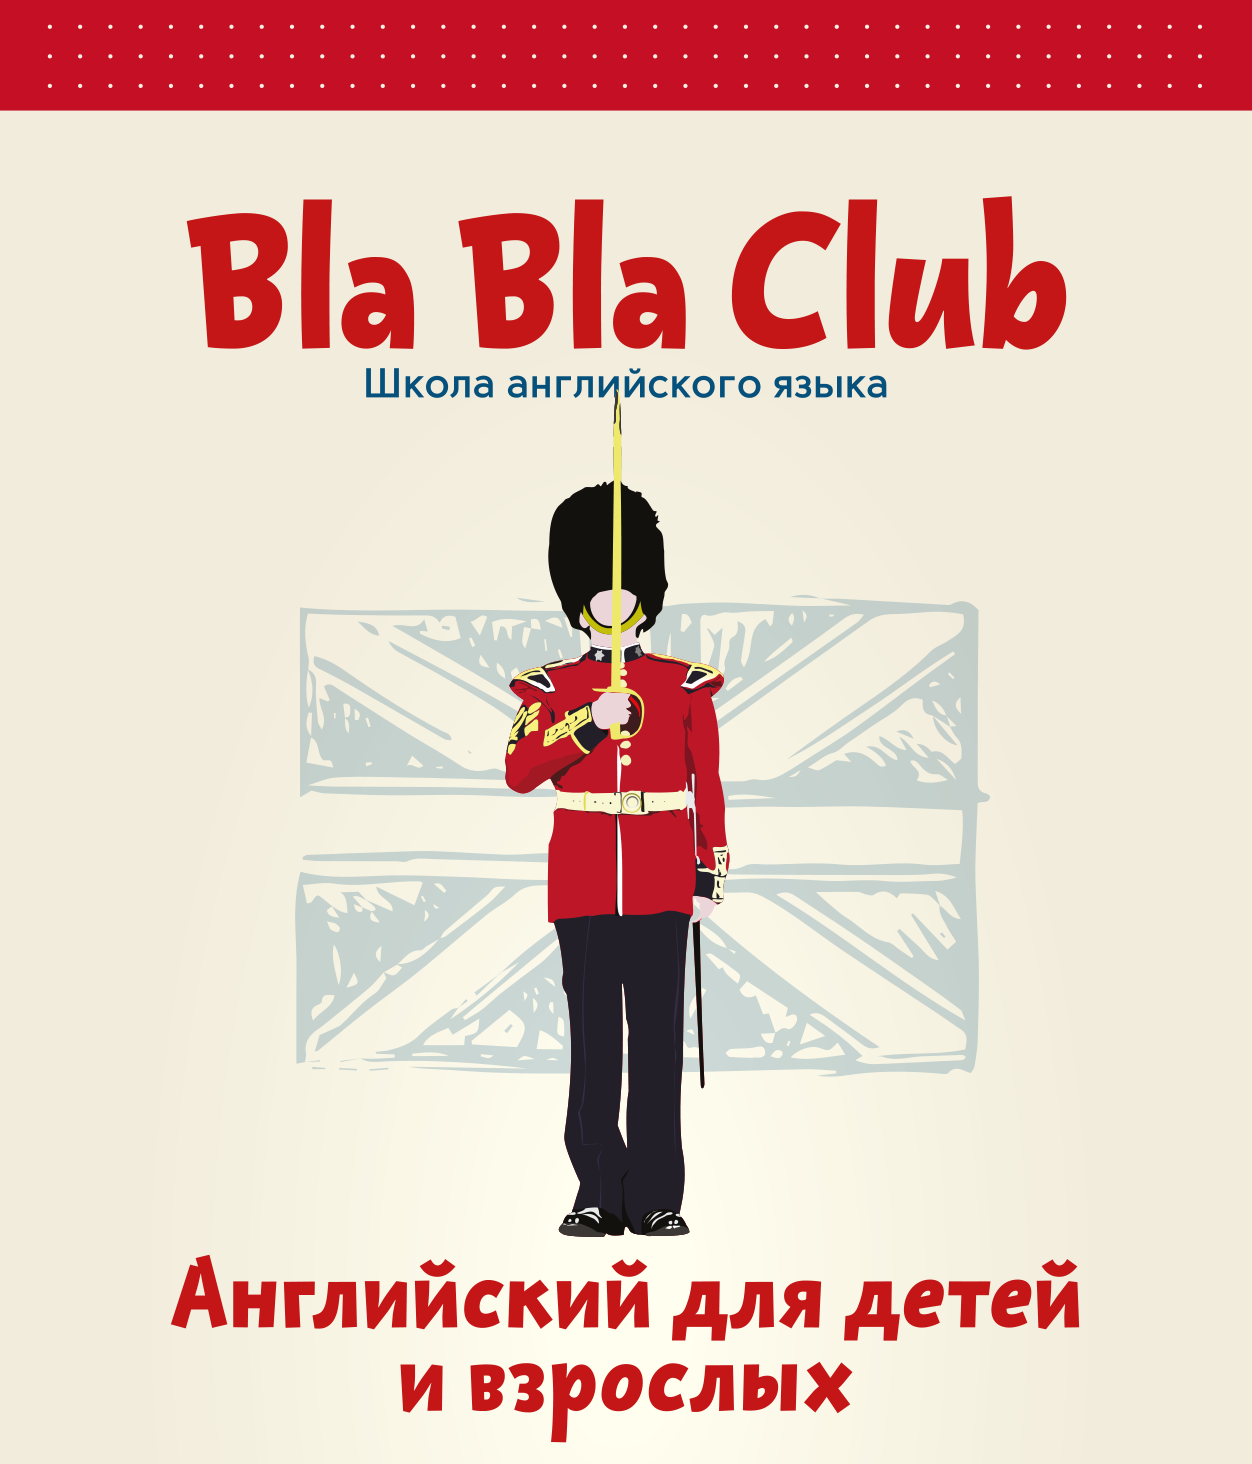 Bla Bla Club, Bla Bla Club - Школа английского языка